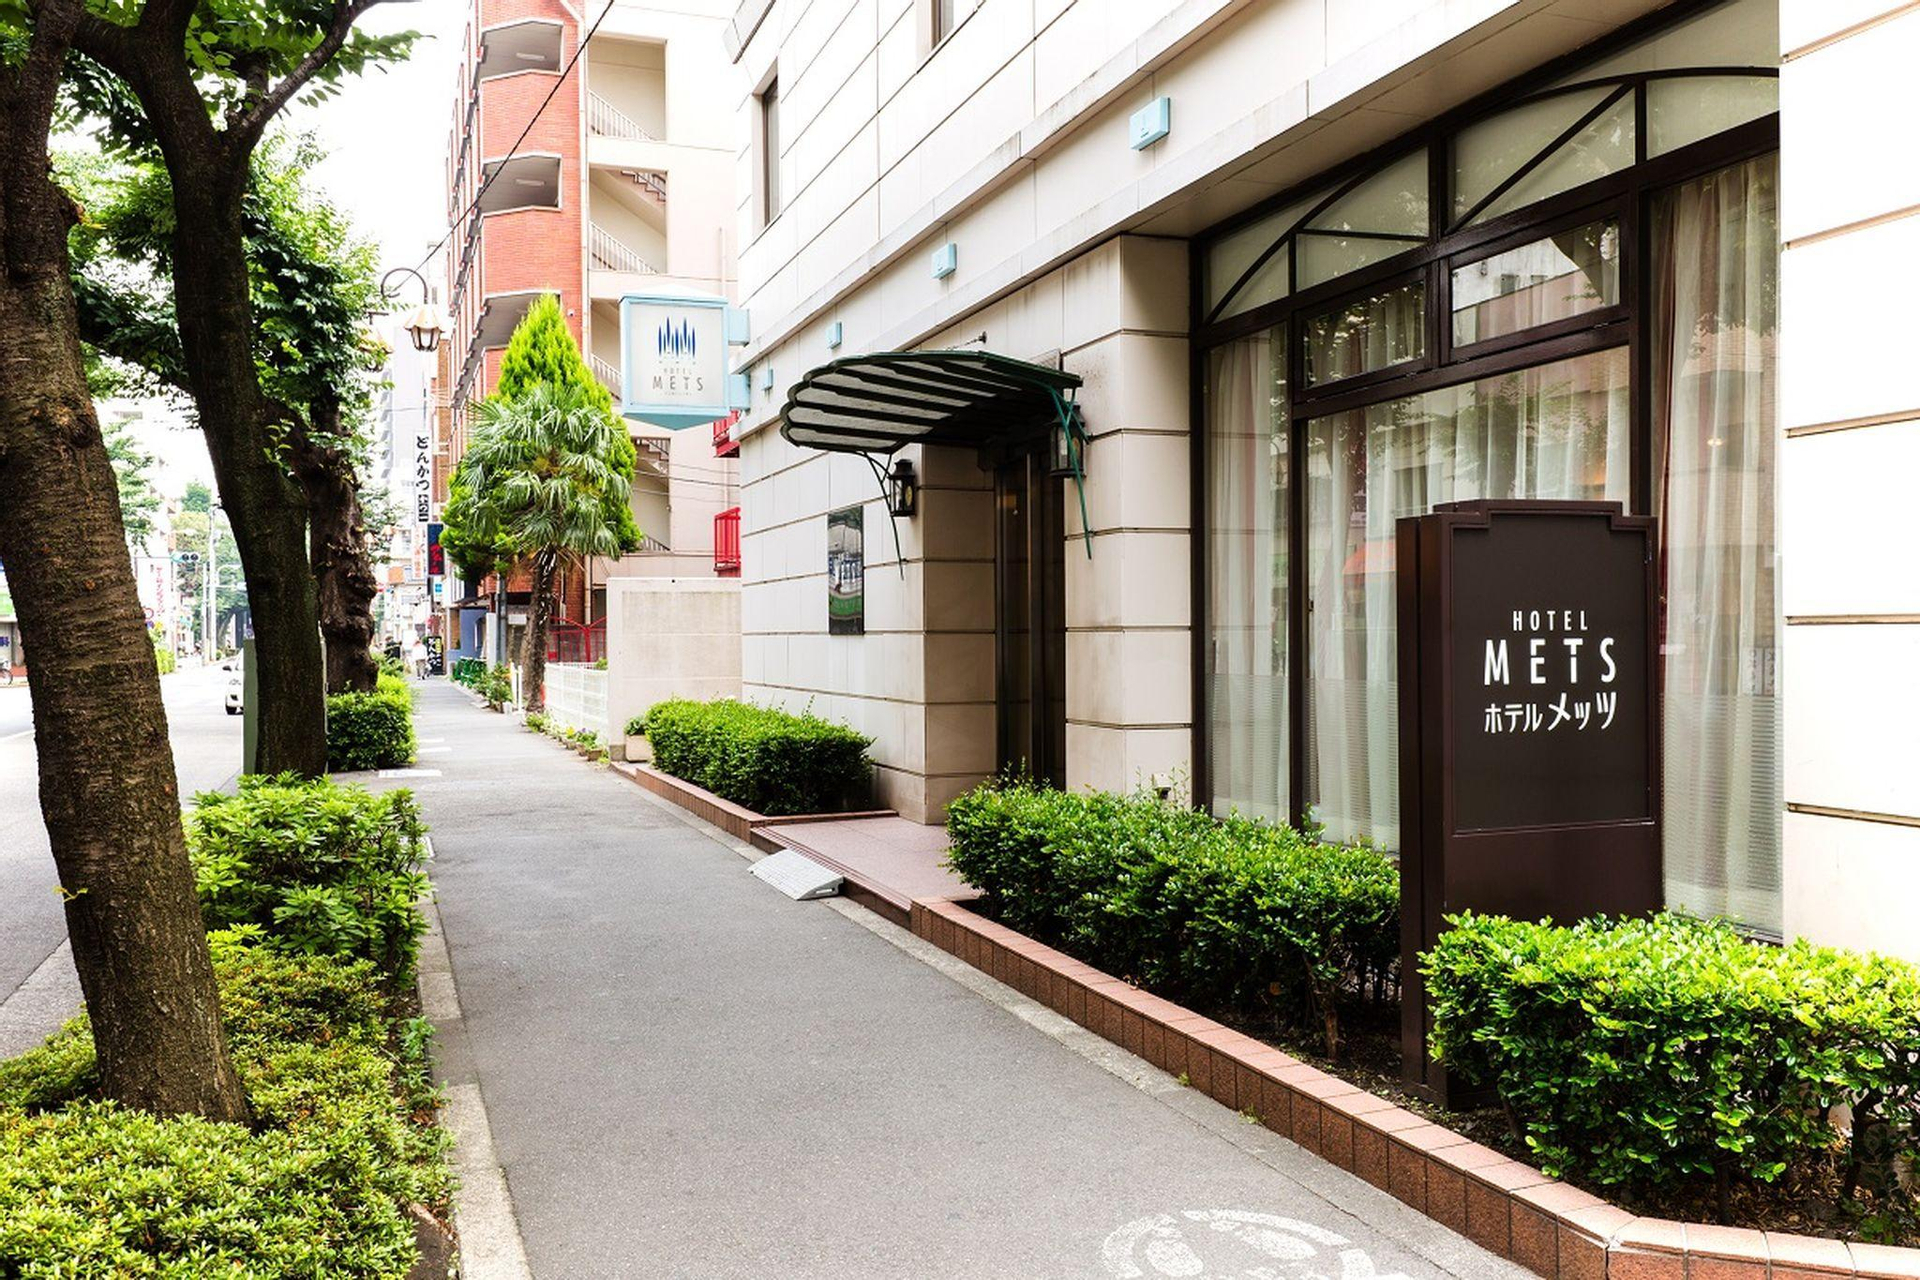 Exterior & Views, JR-EAST HOTEL METS KUMEGAWA, Higashimurayama